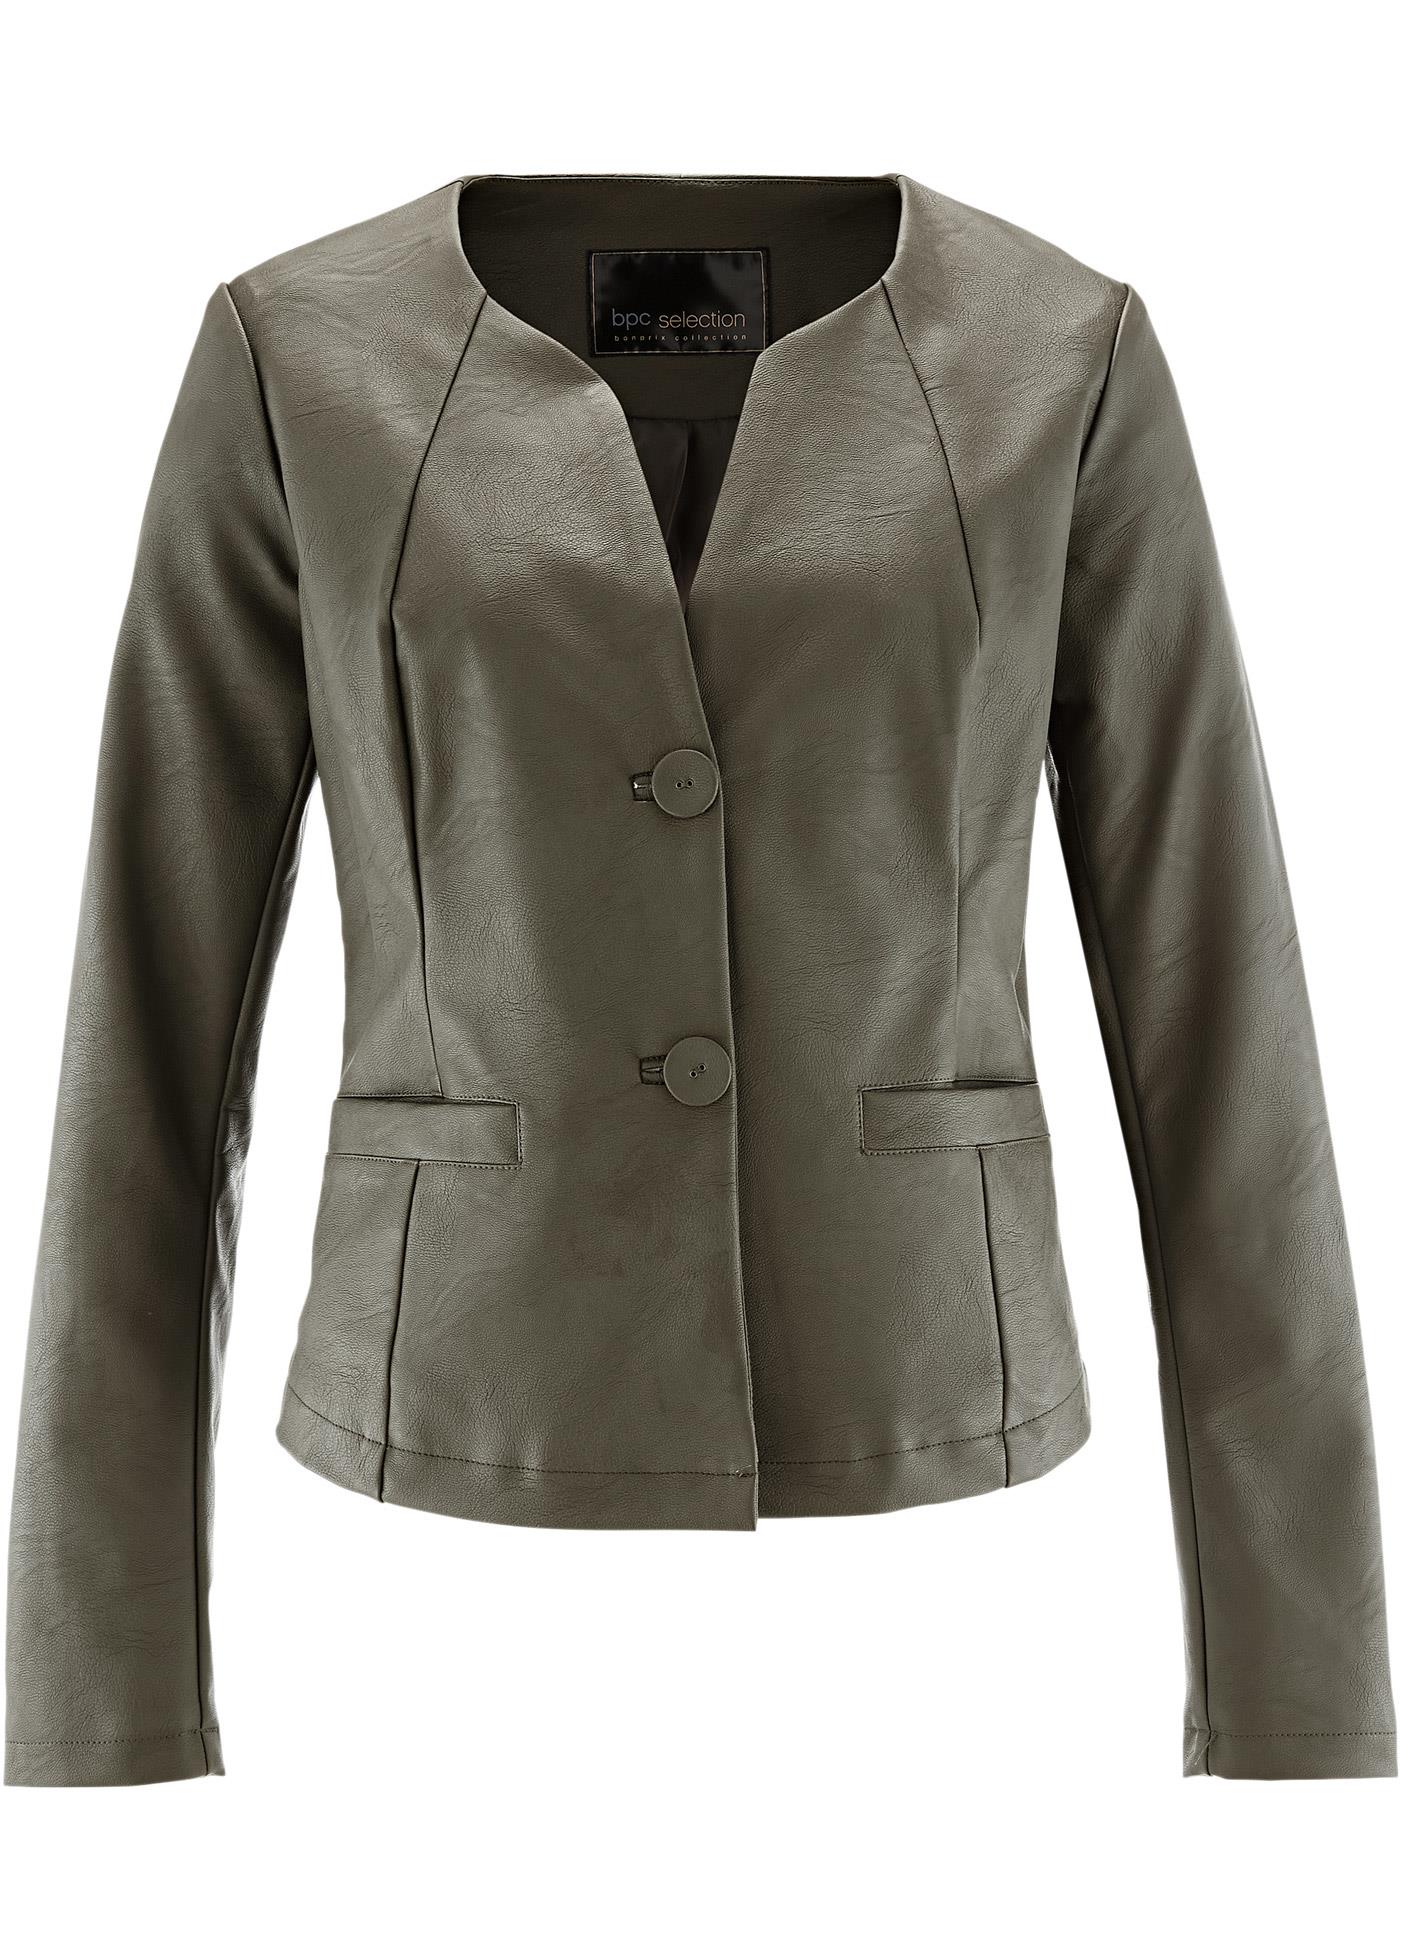 Bpc selection bonprix collection куртка